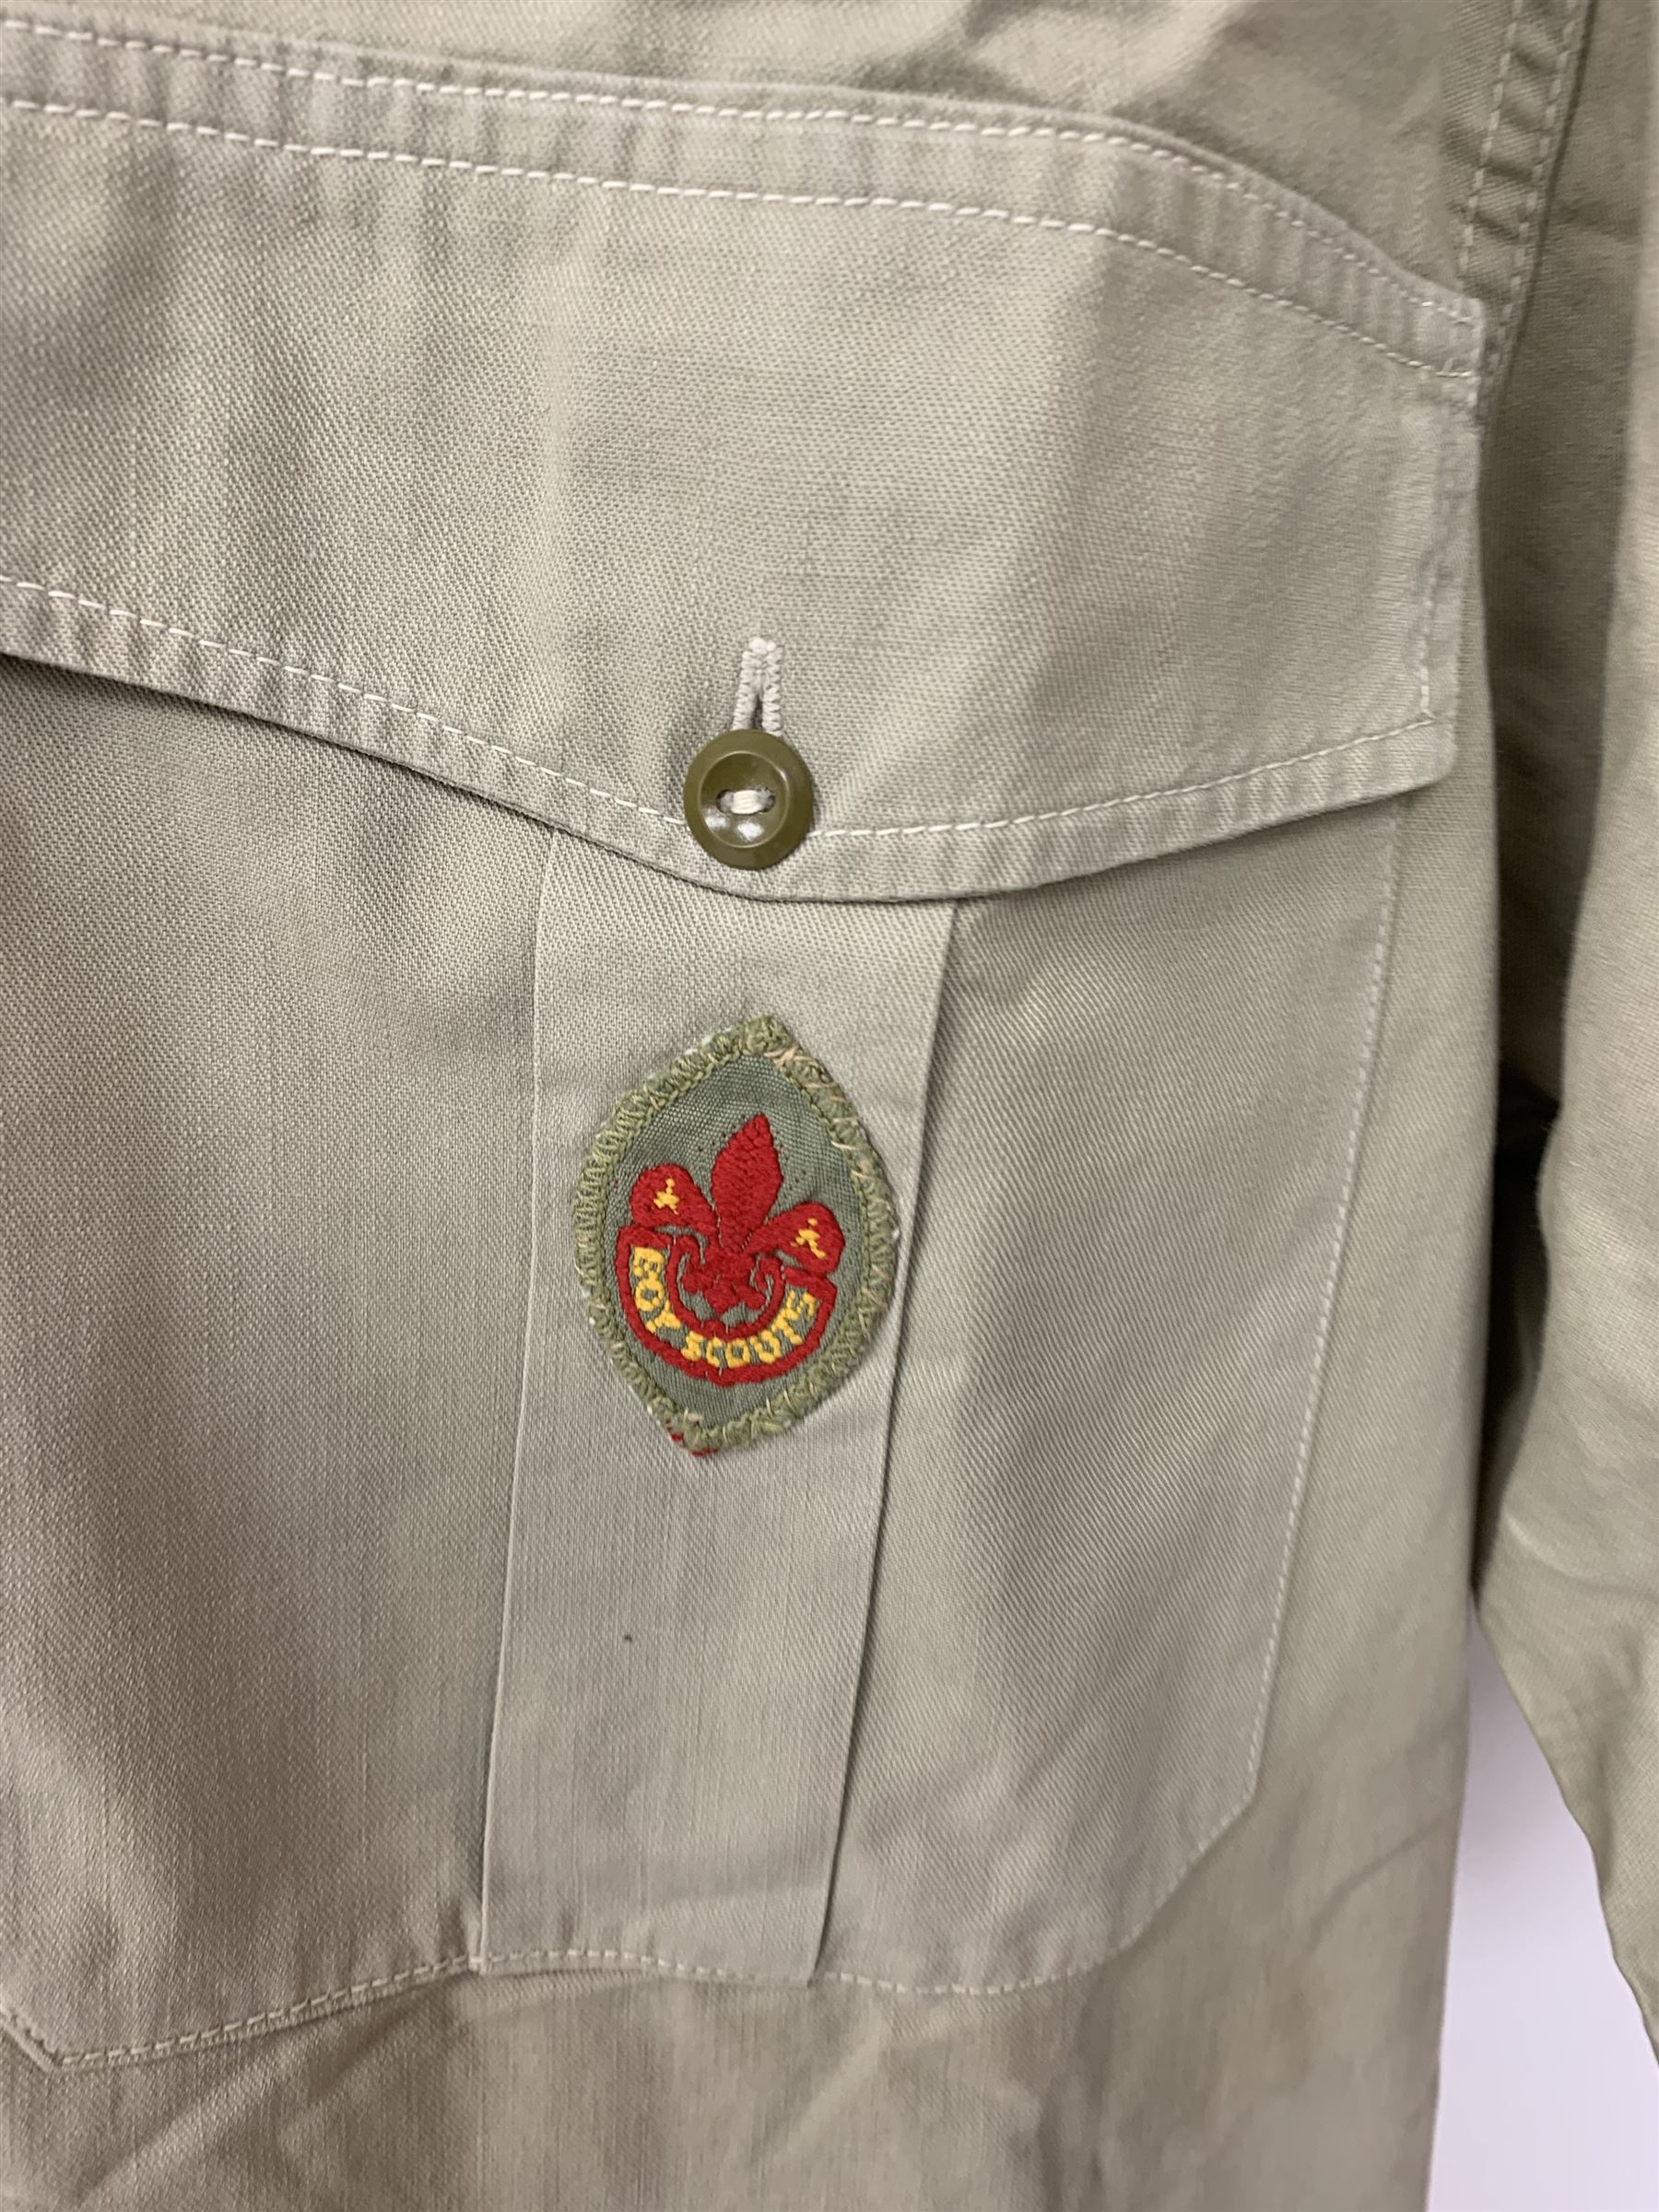 Mid 20th century Boy Scouts uniform - Image 7 of 8